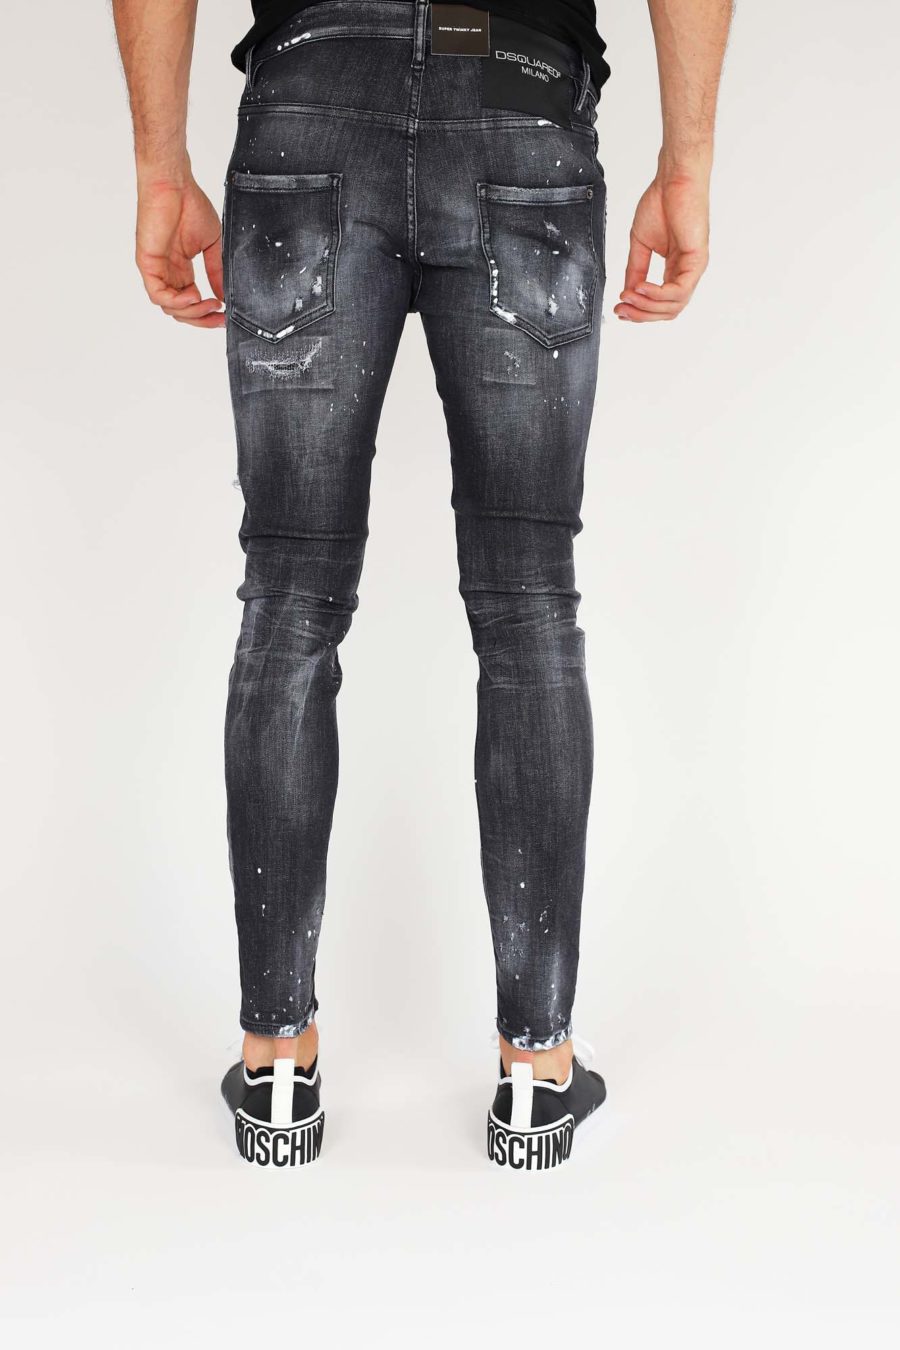 Jeans "Super Twinky Jean" mit Reißverschluss - IMG 9860